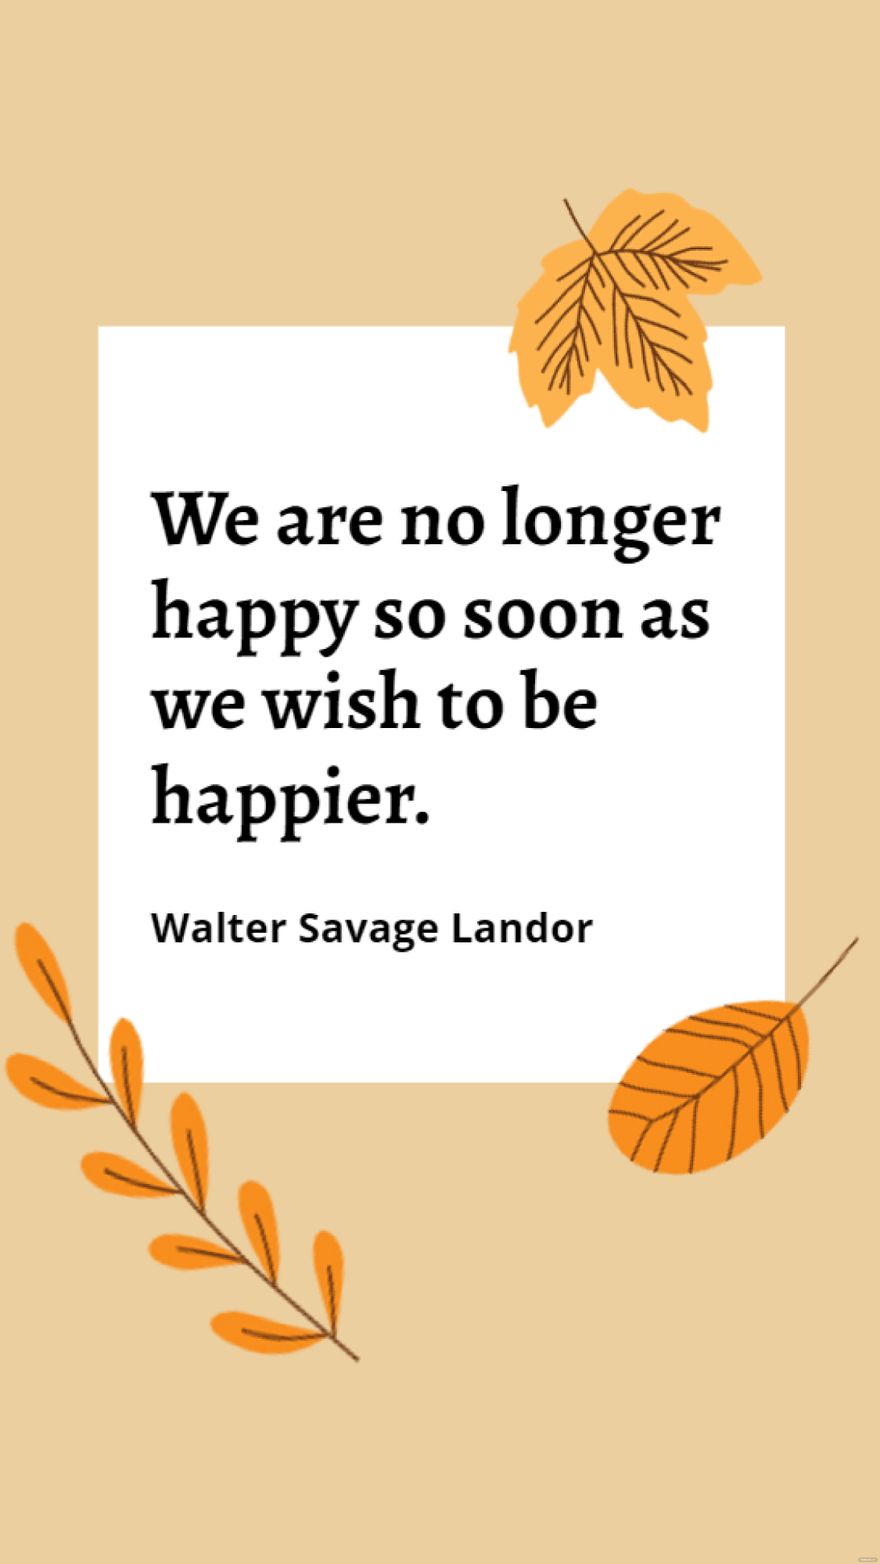 Free Walter Savage Landor - We are no longer happy so soon as we wish to be happier. in JPG